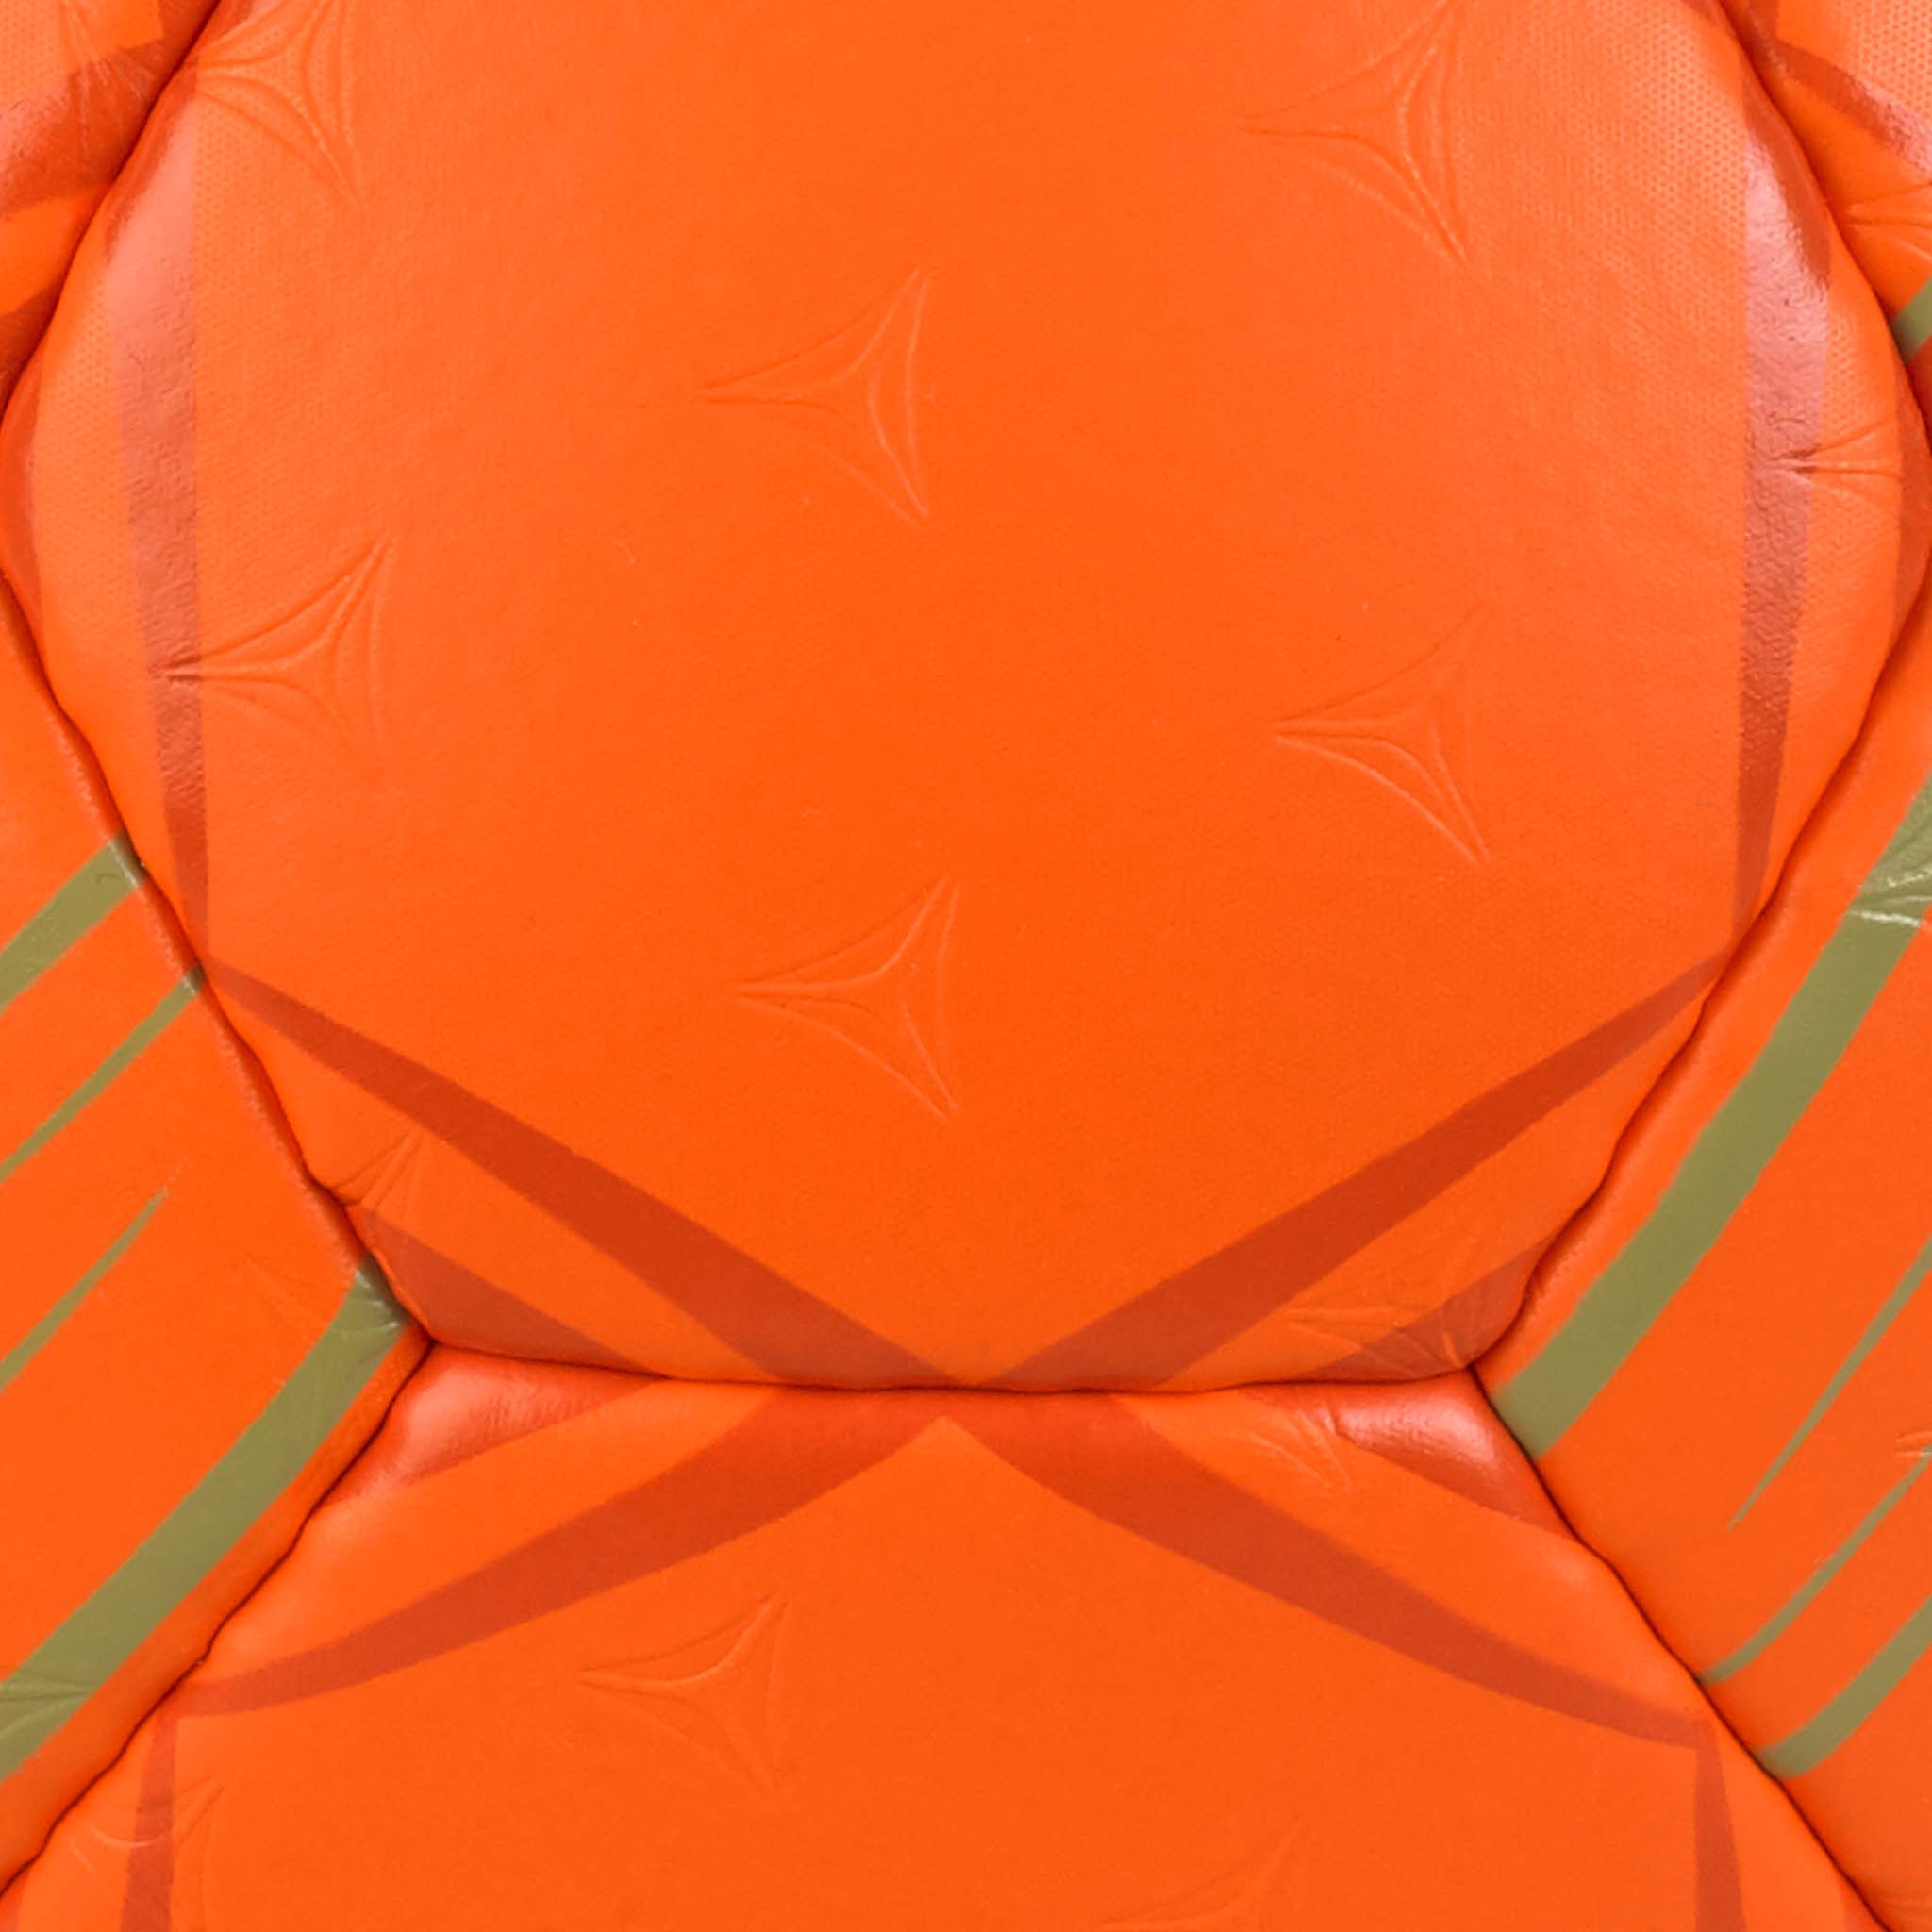 Handball - Solera #colour_orange #colour_orange